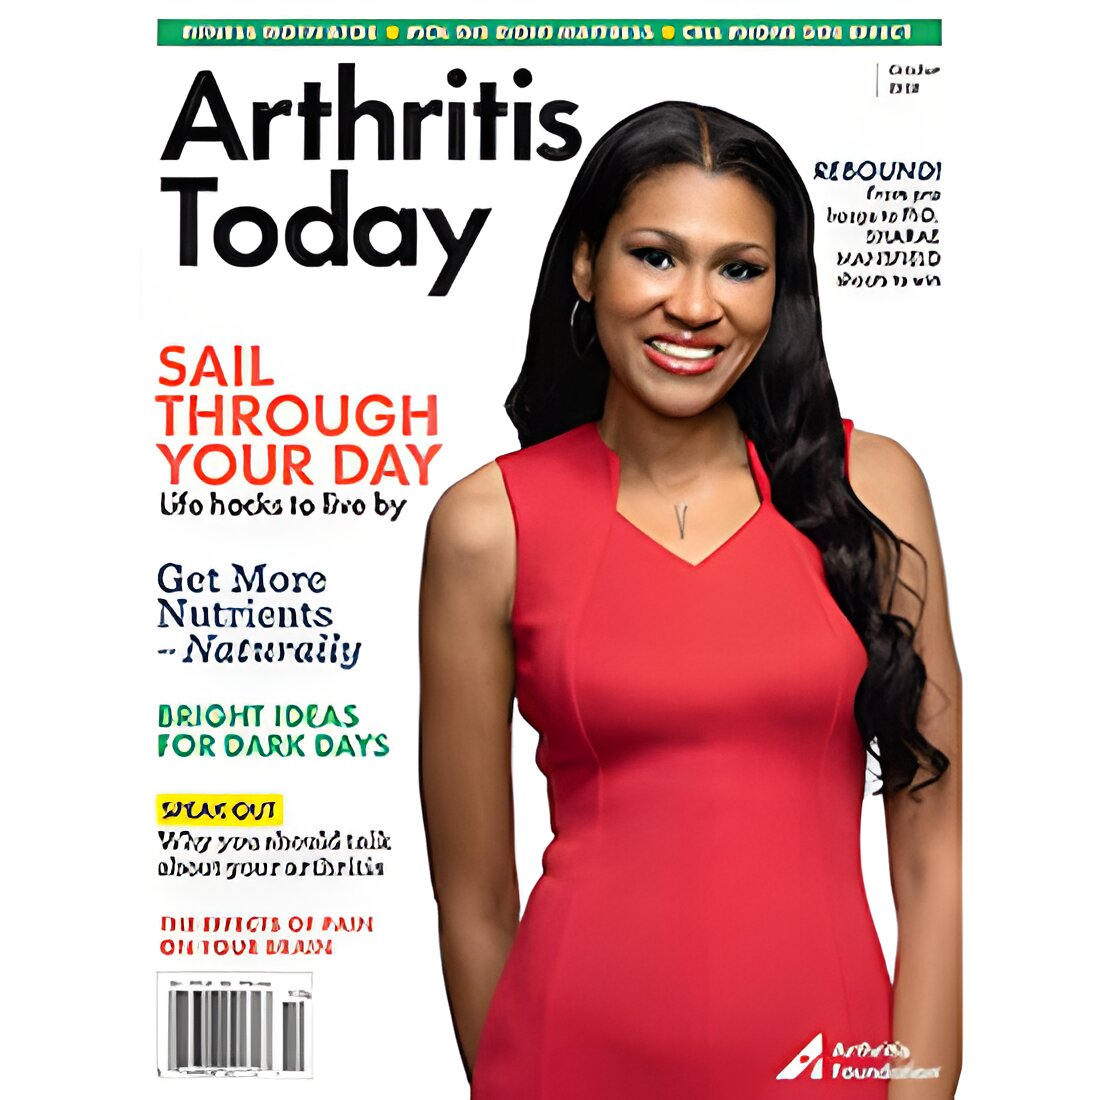 Free 1-Year Subscription To Arthritis Today Magazine